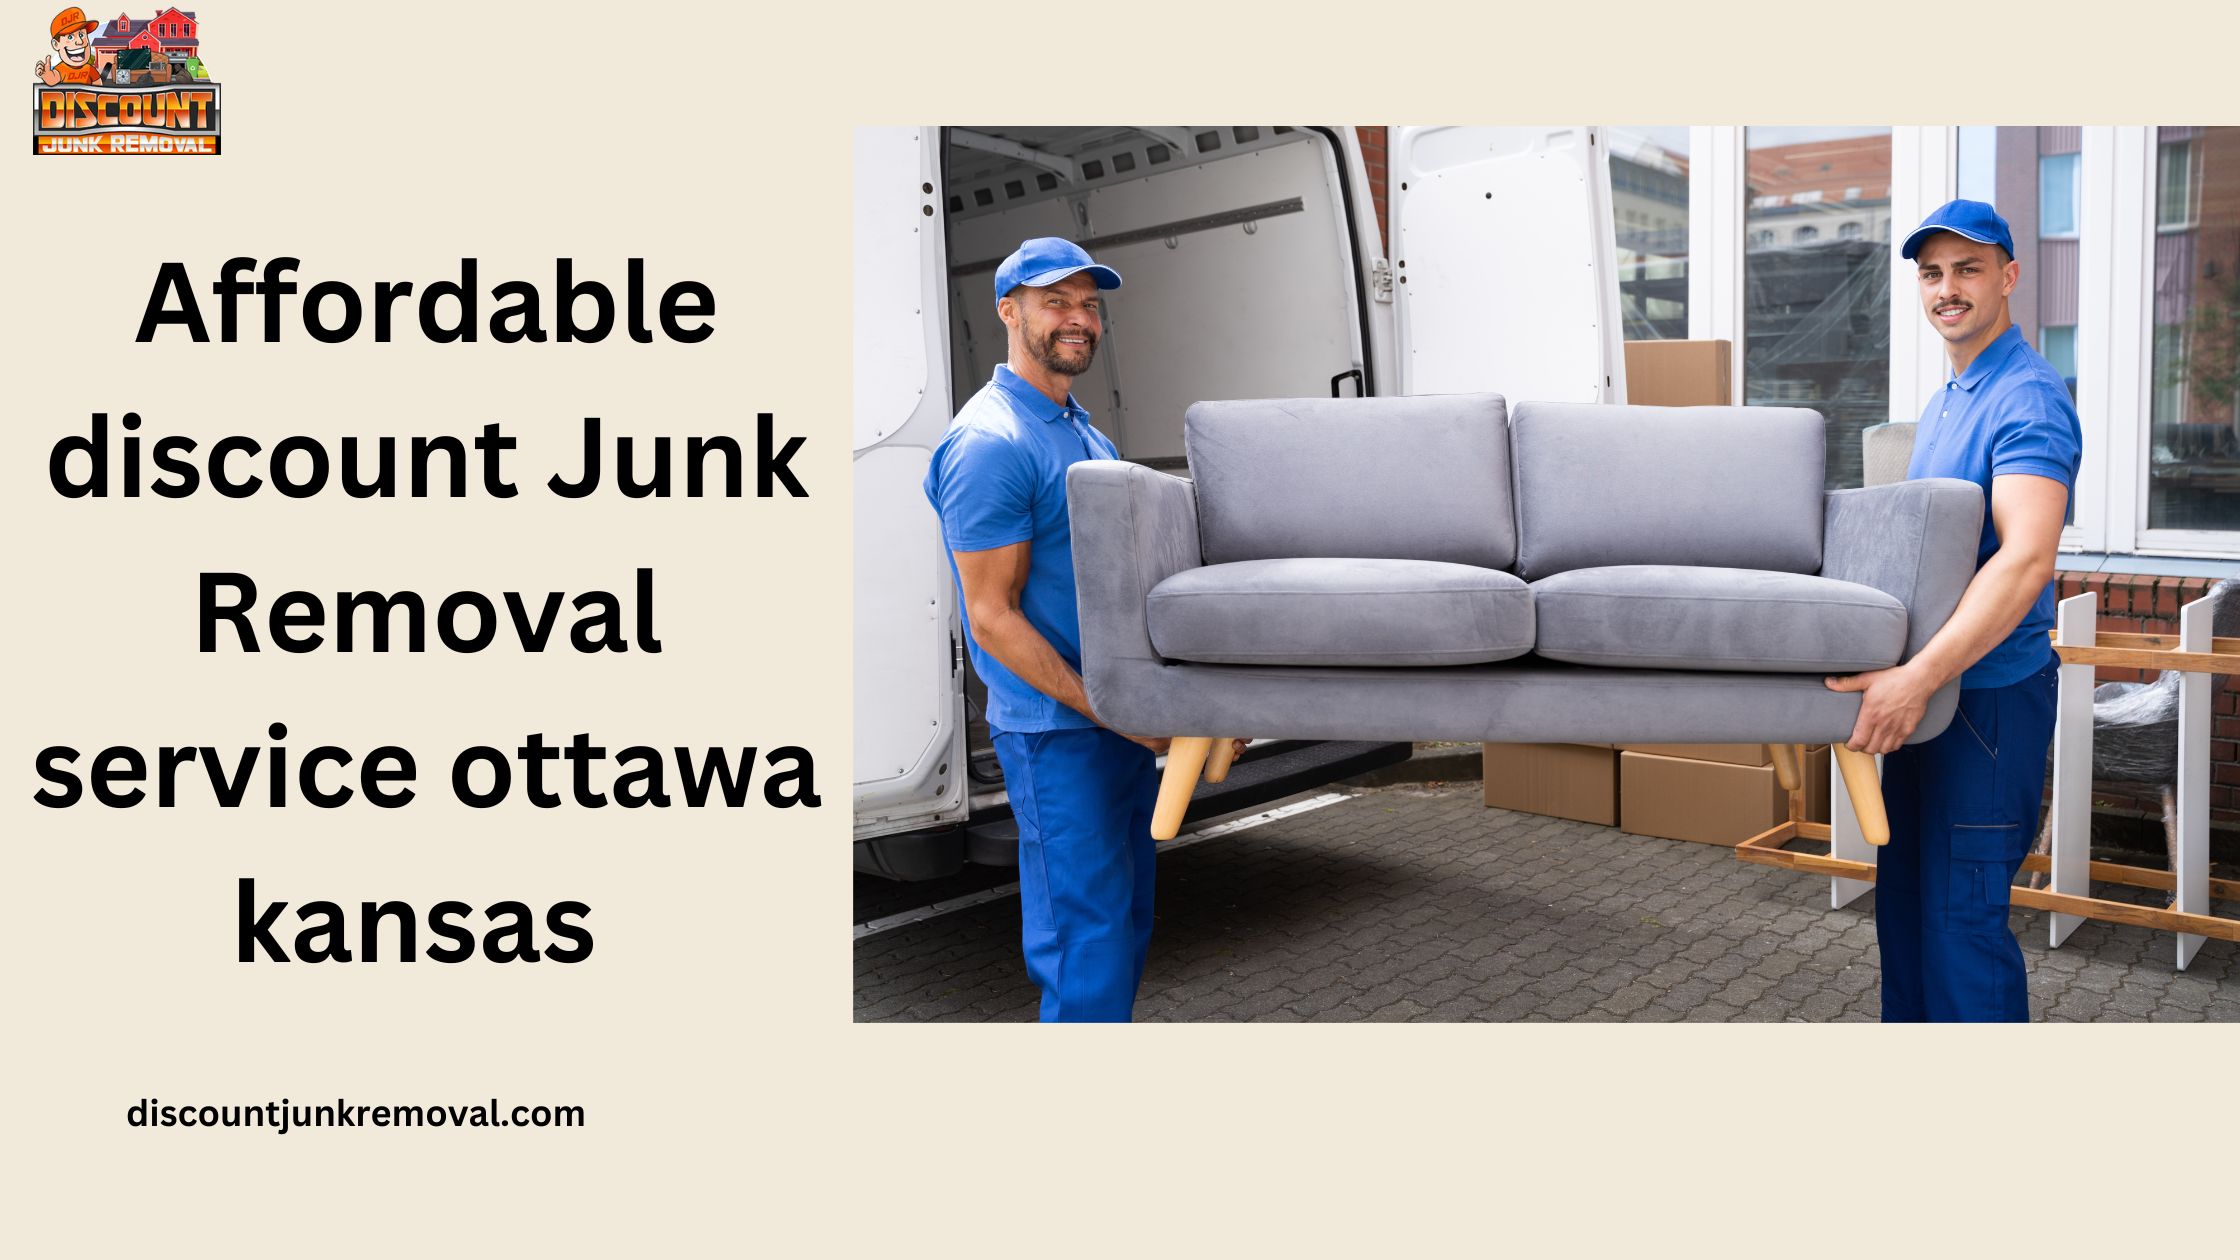 Affordable discount Junk Removal service ottawa kansas